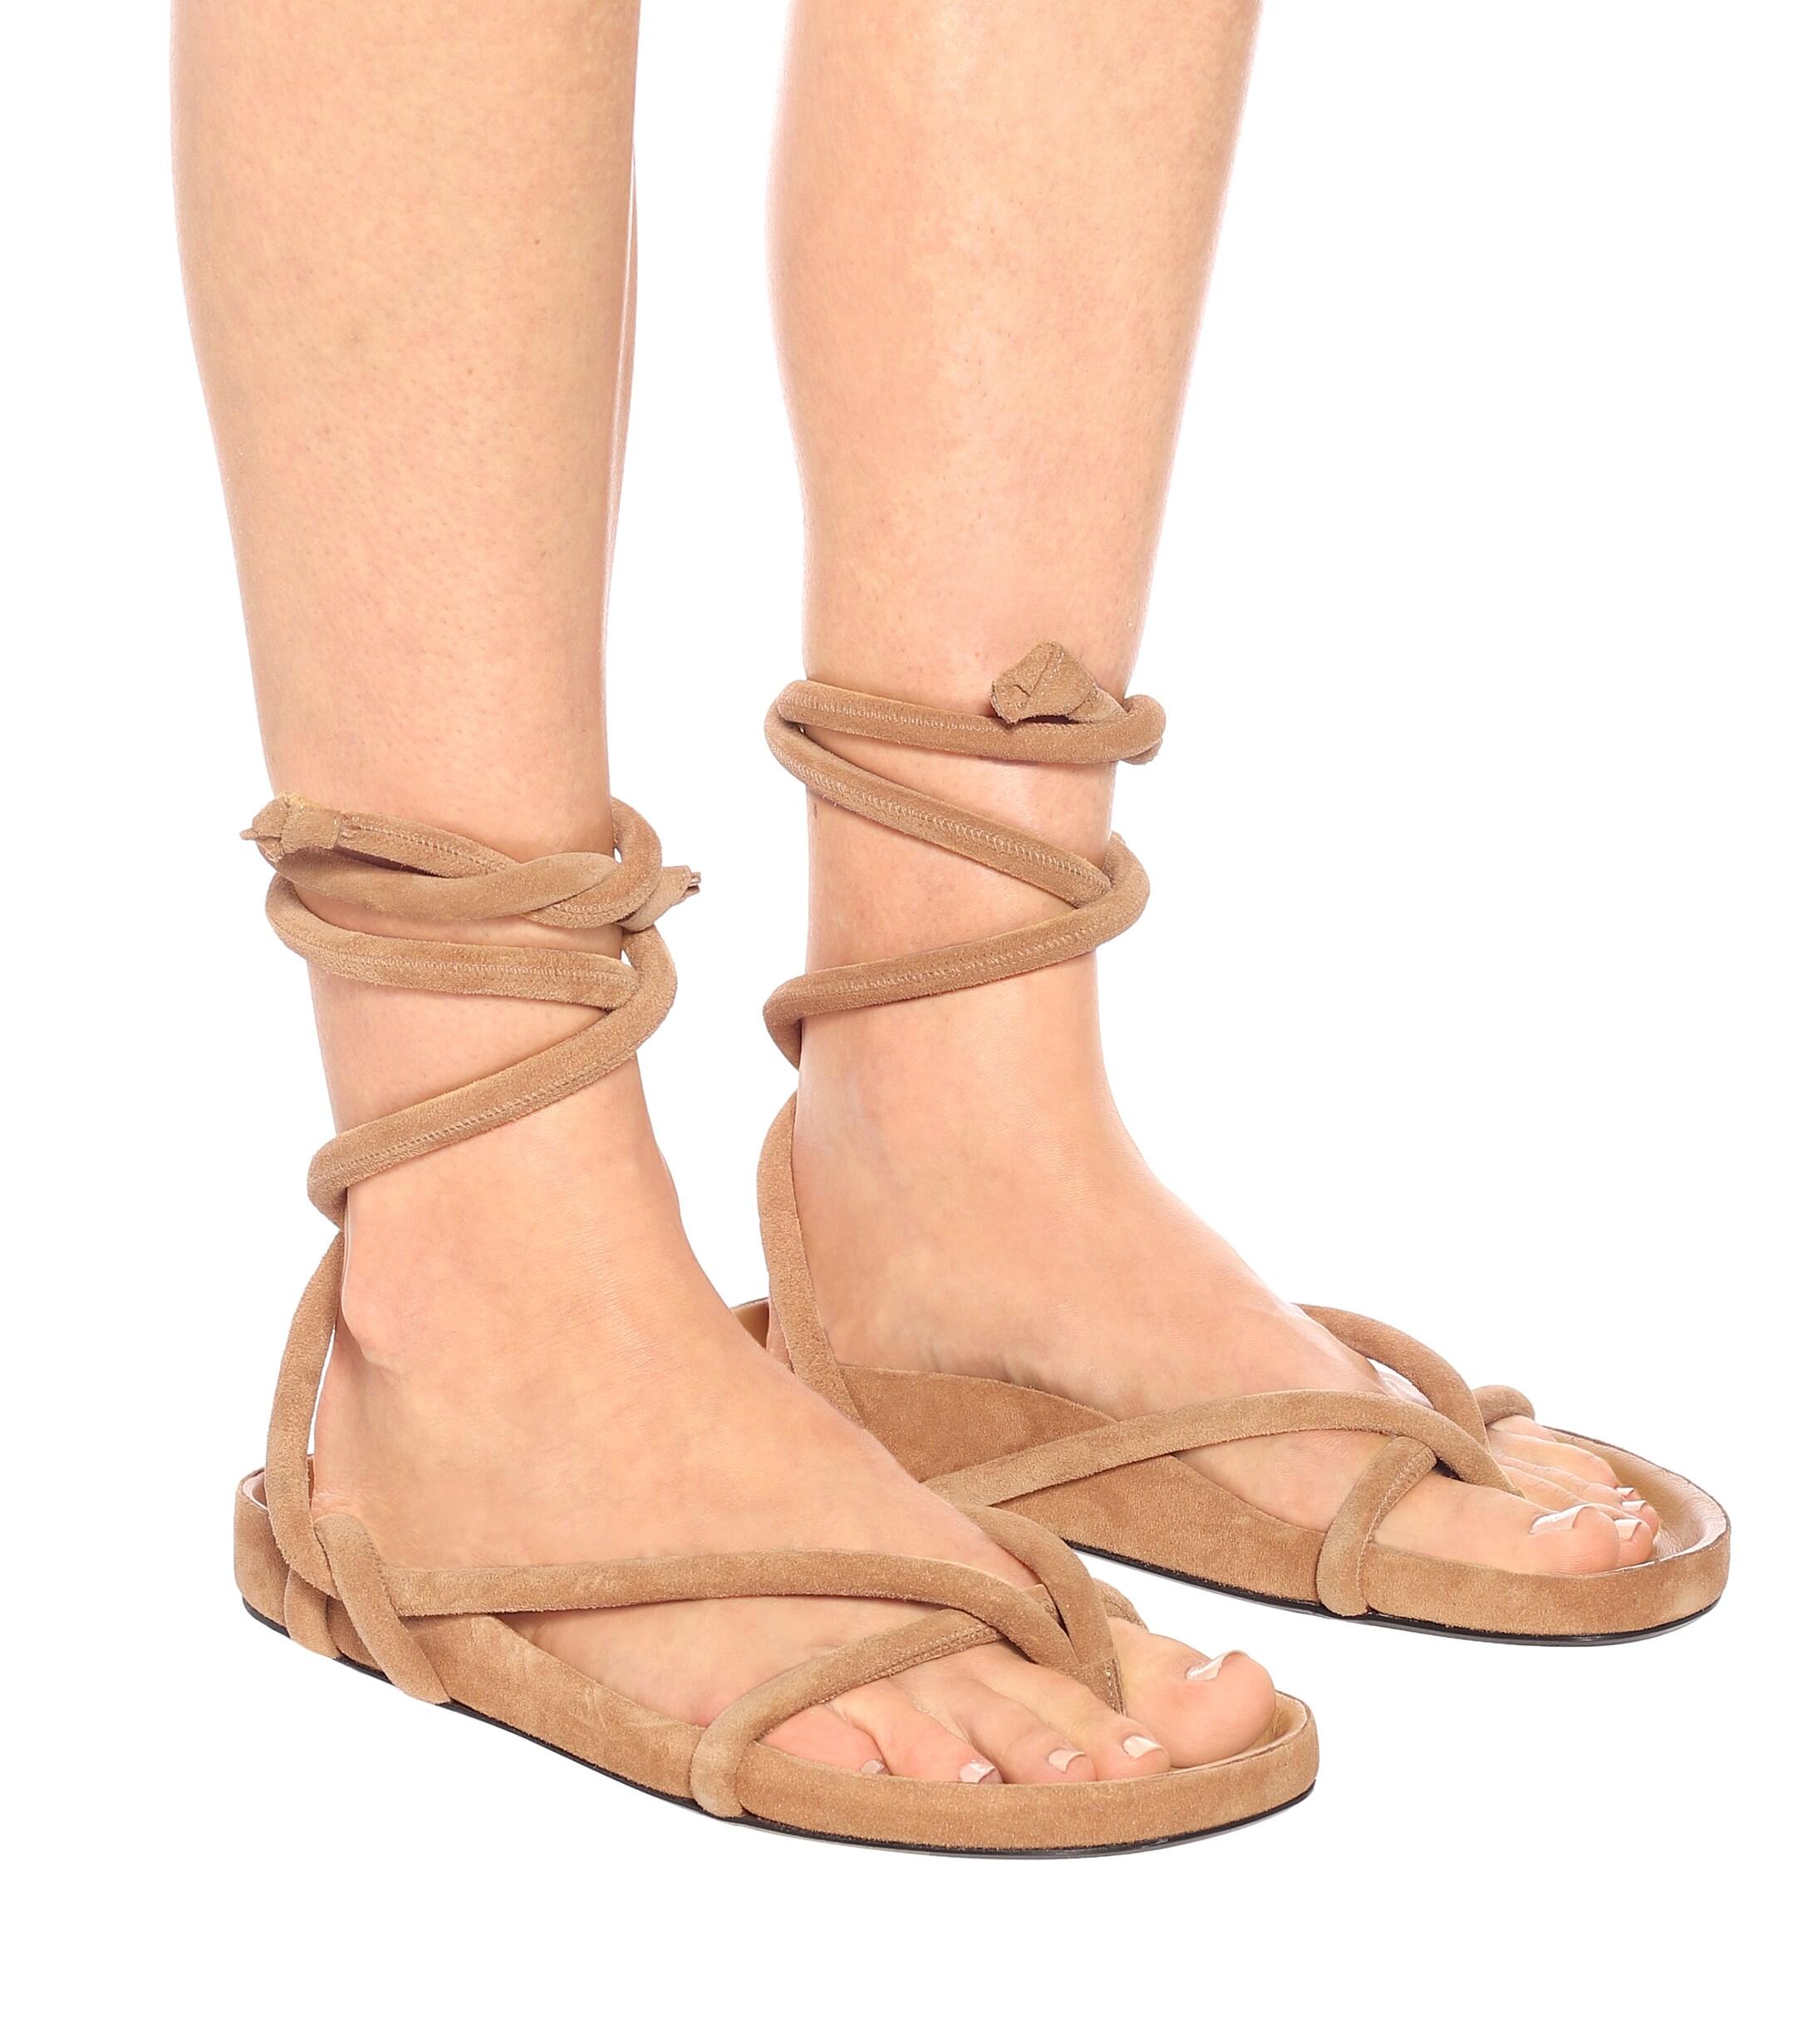 Isabel Marant Lastro Suede Sandals in Beige (Natural) - Lyst